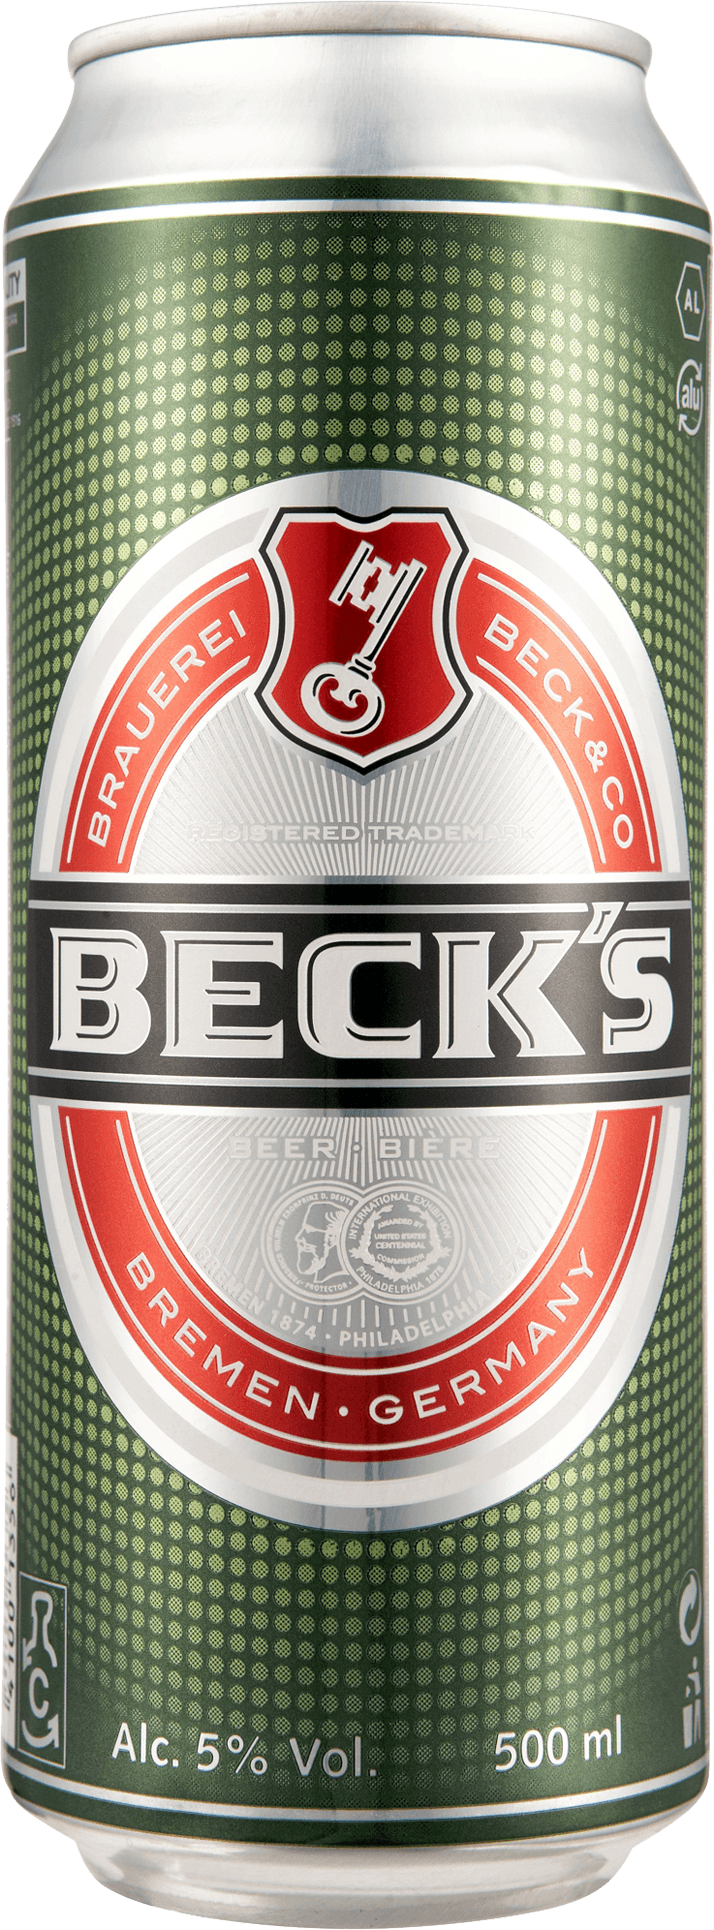 Becks - Lager / 500mL / Can